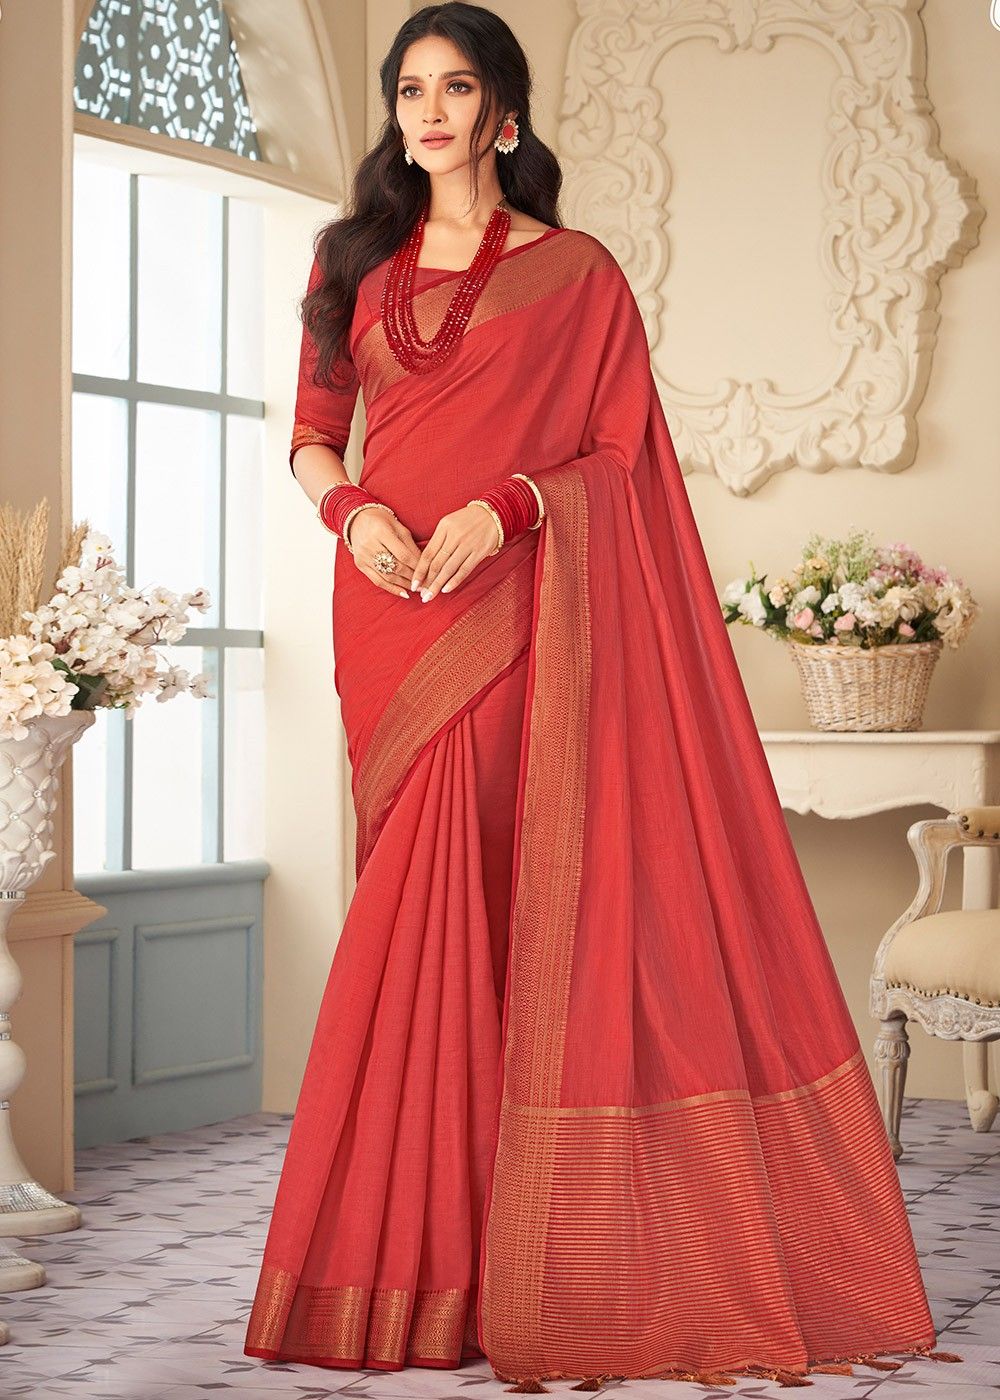 Aggregate 127+ red colour plain saree super hot